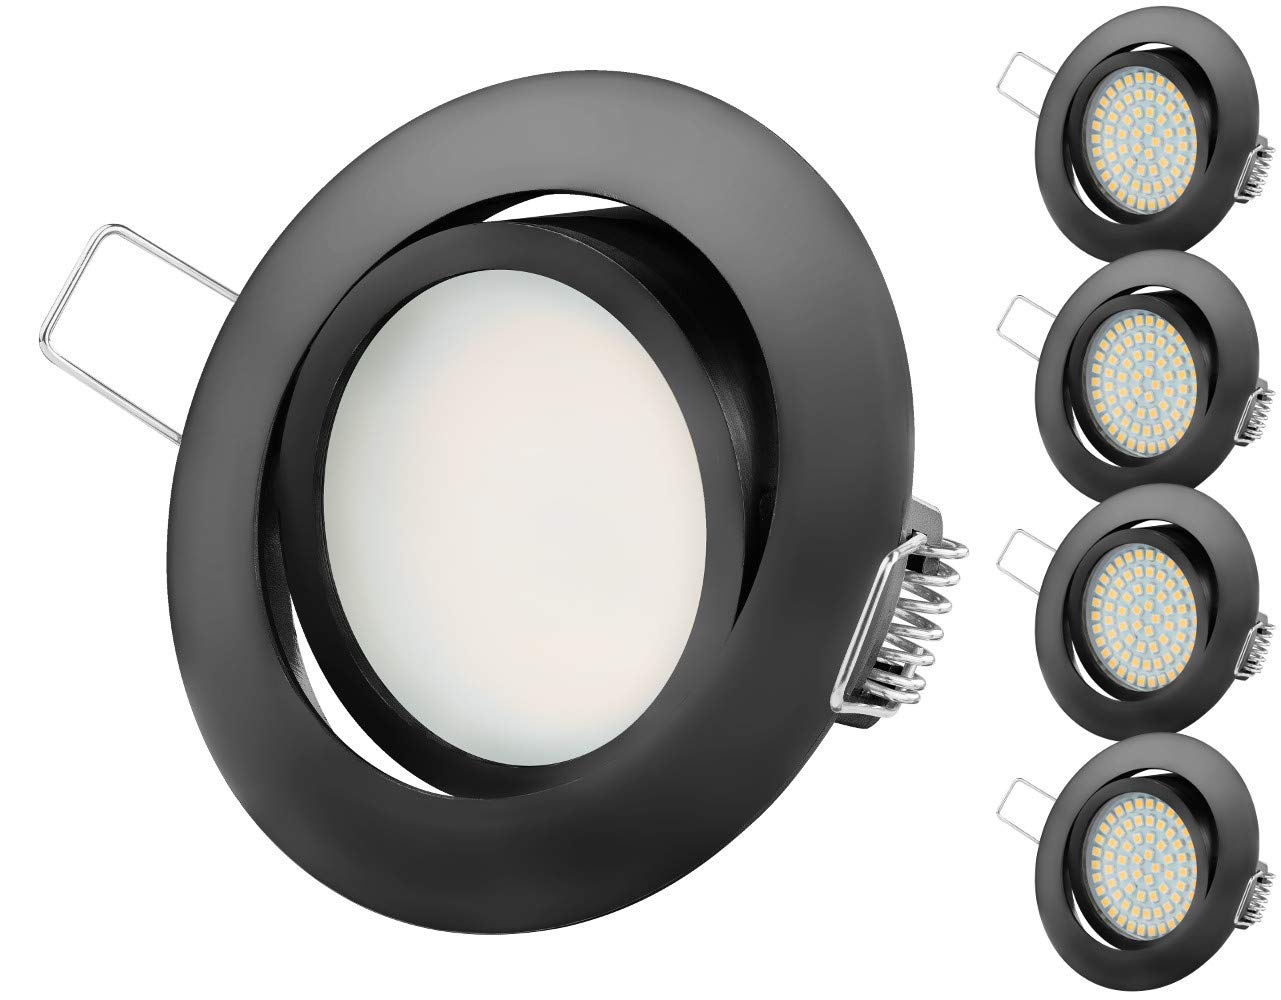 TEVEA Ultra Flach DIMMBAR Einbaustrahler - Schwarz Matt - 4W 230V LED Module austauschbar- Einbauspots - Einbauleuchten - 5er Pack (Warmweiß -3000K)